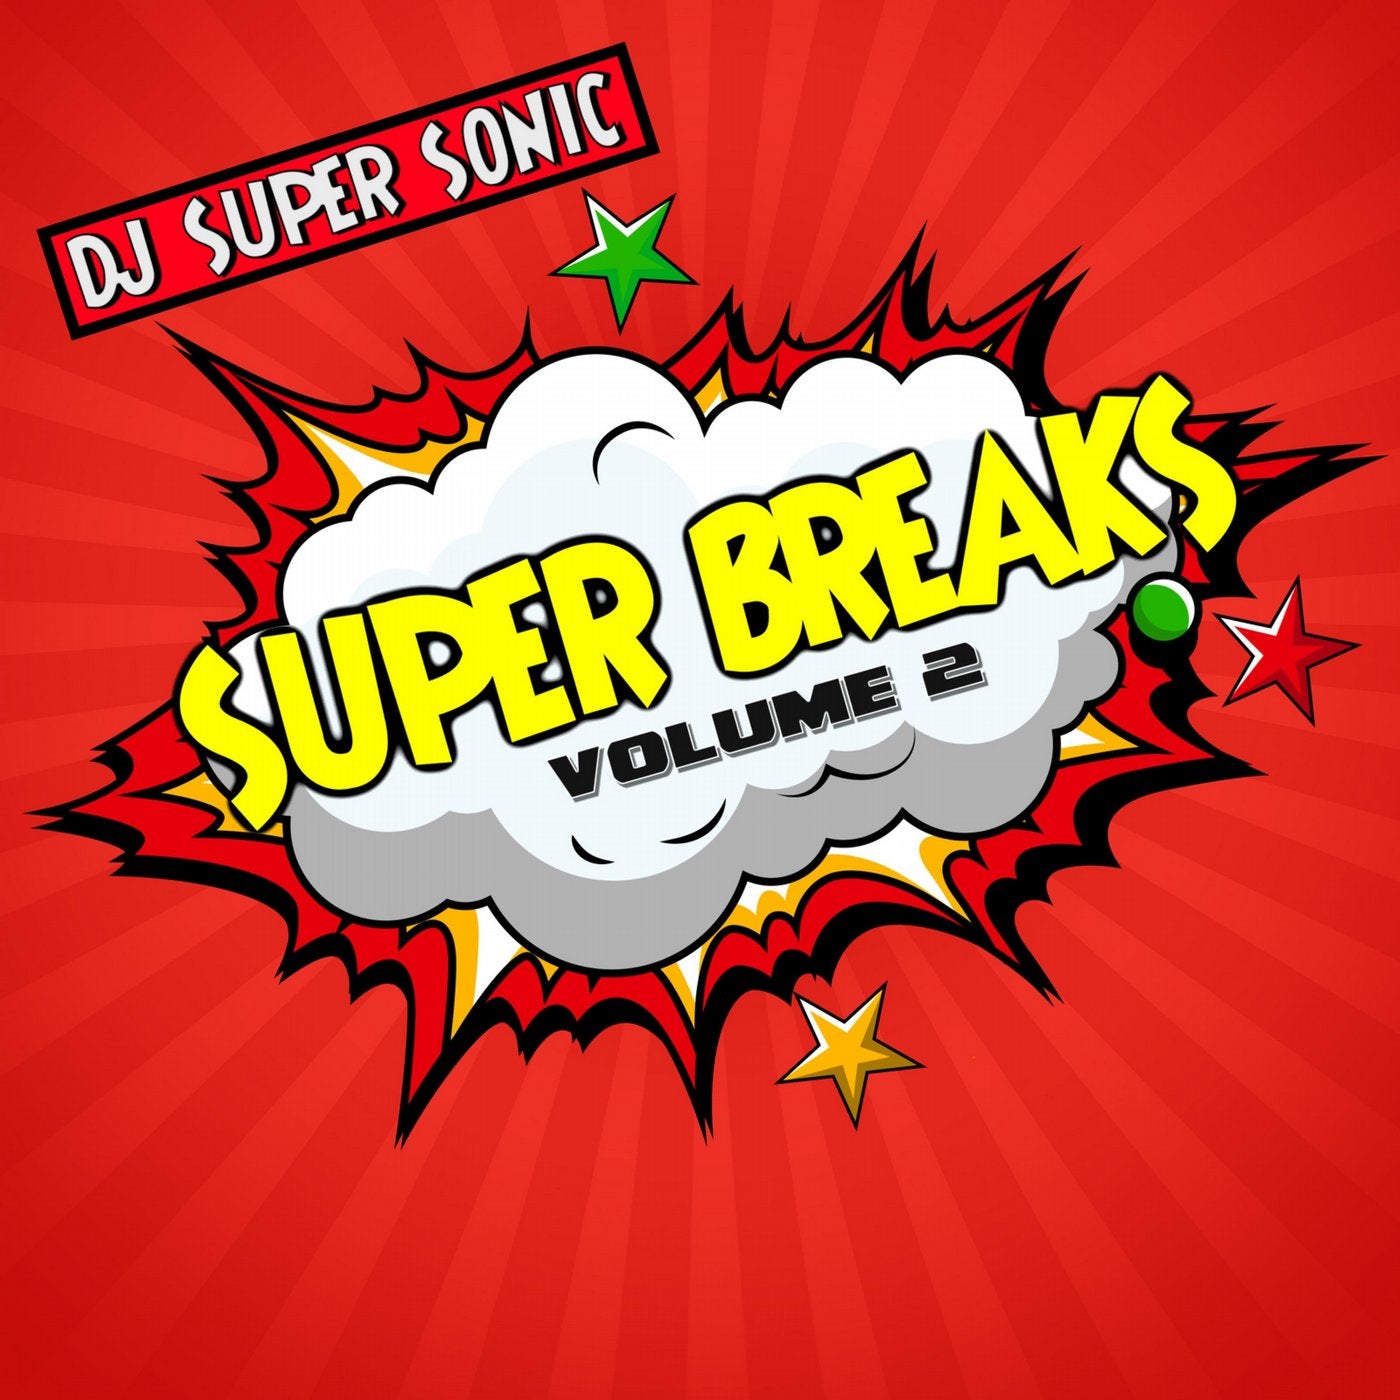 Super Breaks Volume 2